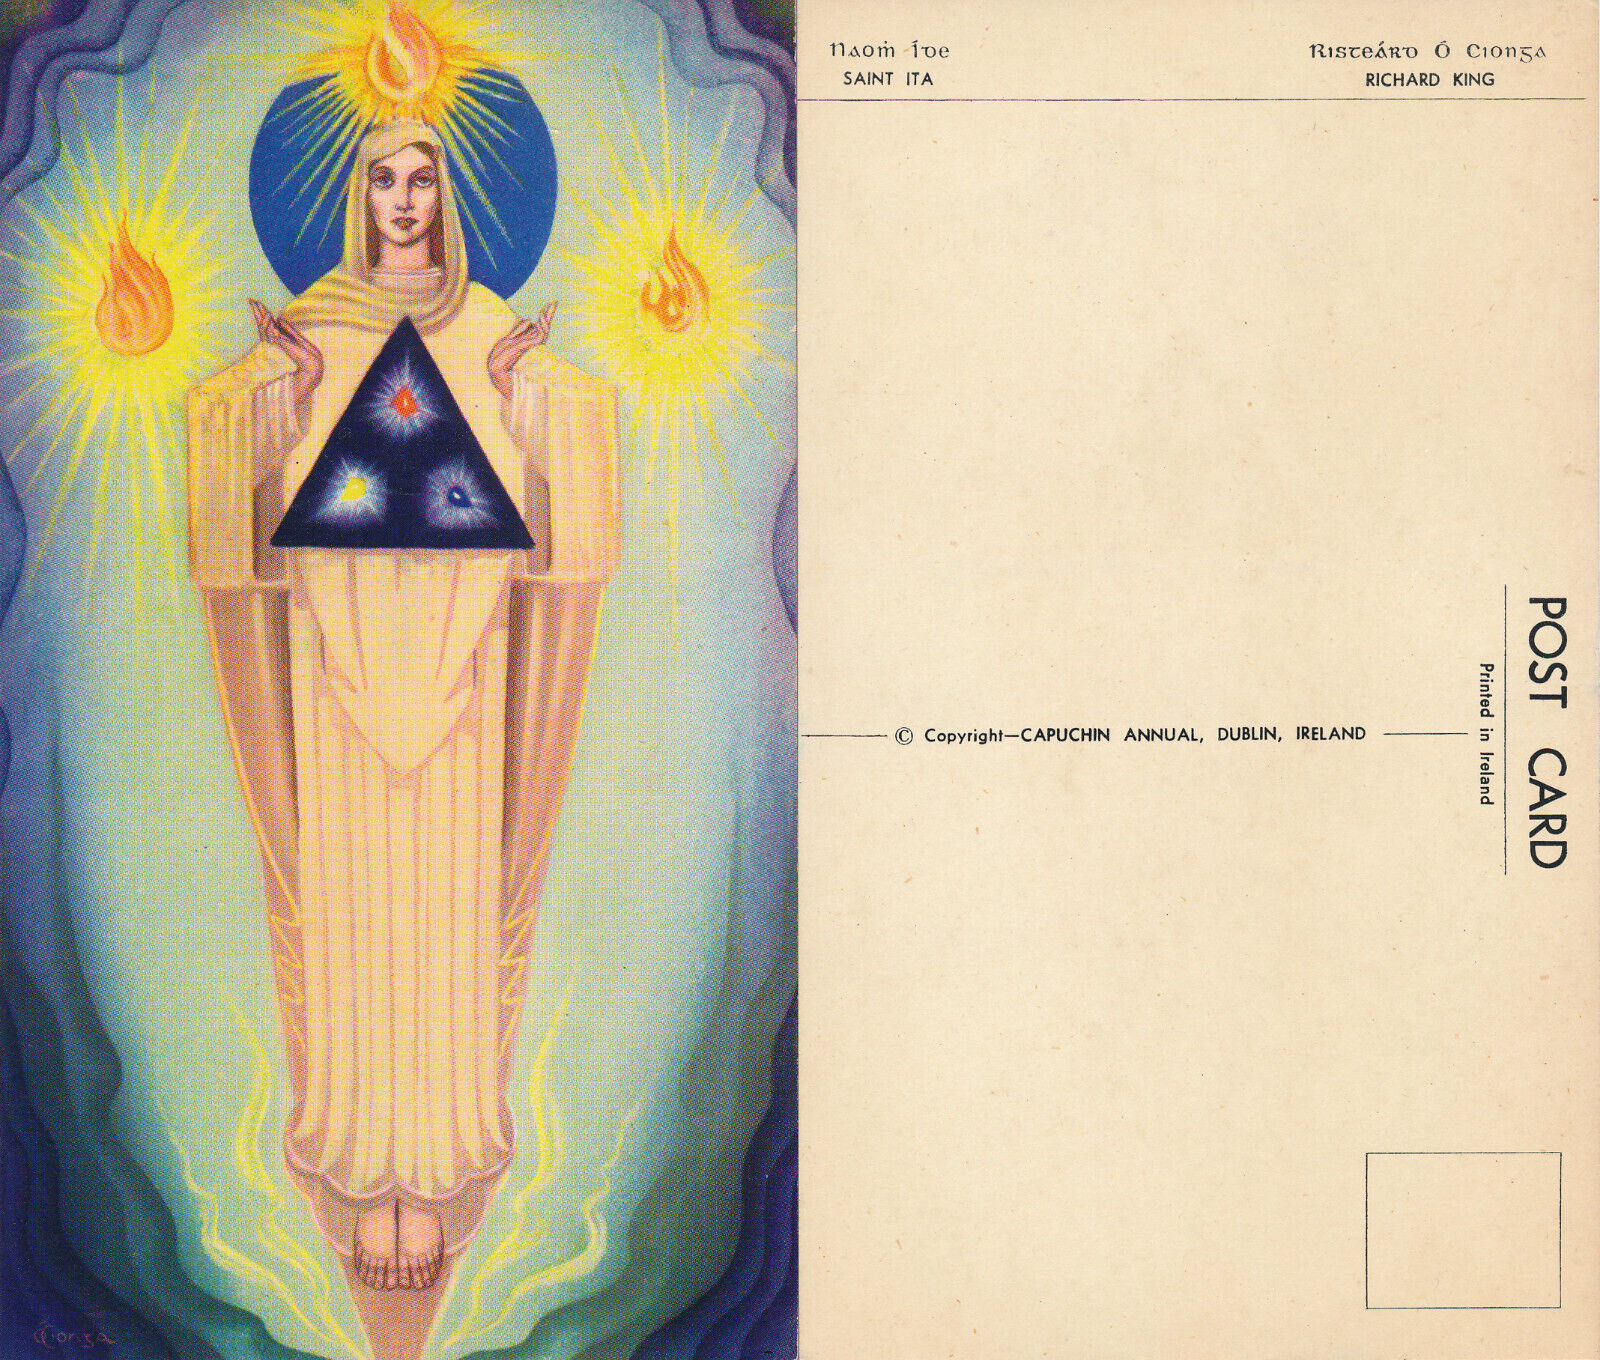 Nine 1950s Irish Postcards Depicting Saints by the Artist Richard King Post Card